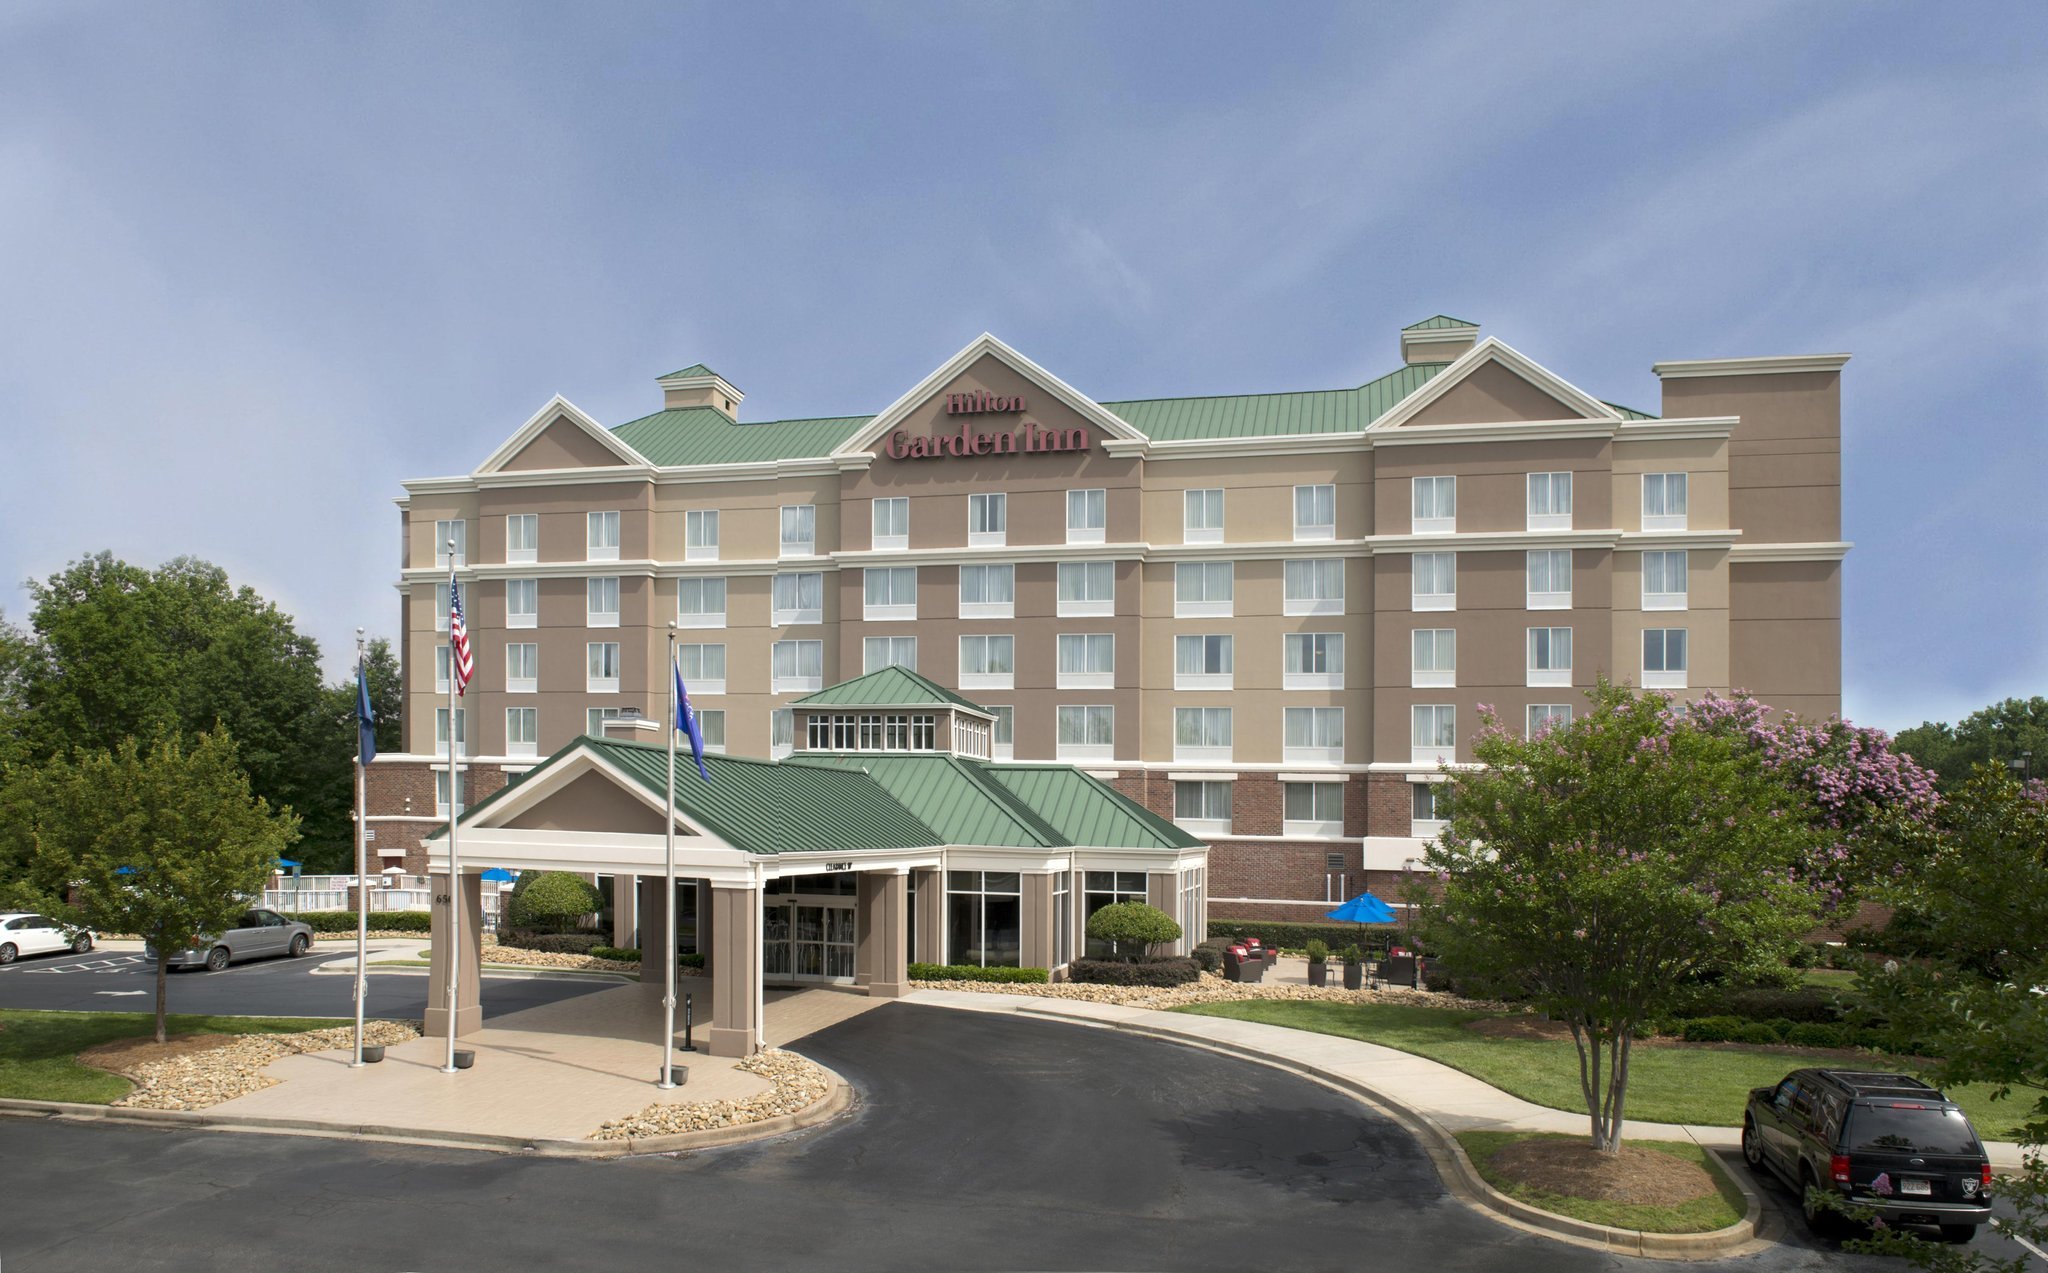 Hotel Rock Hill South Carolina Hrs Hotels In Rock Hill South